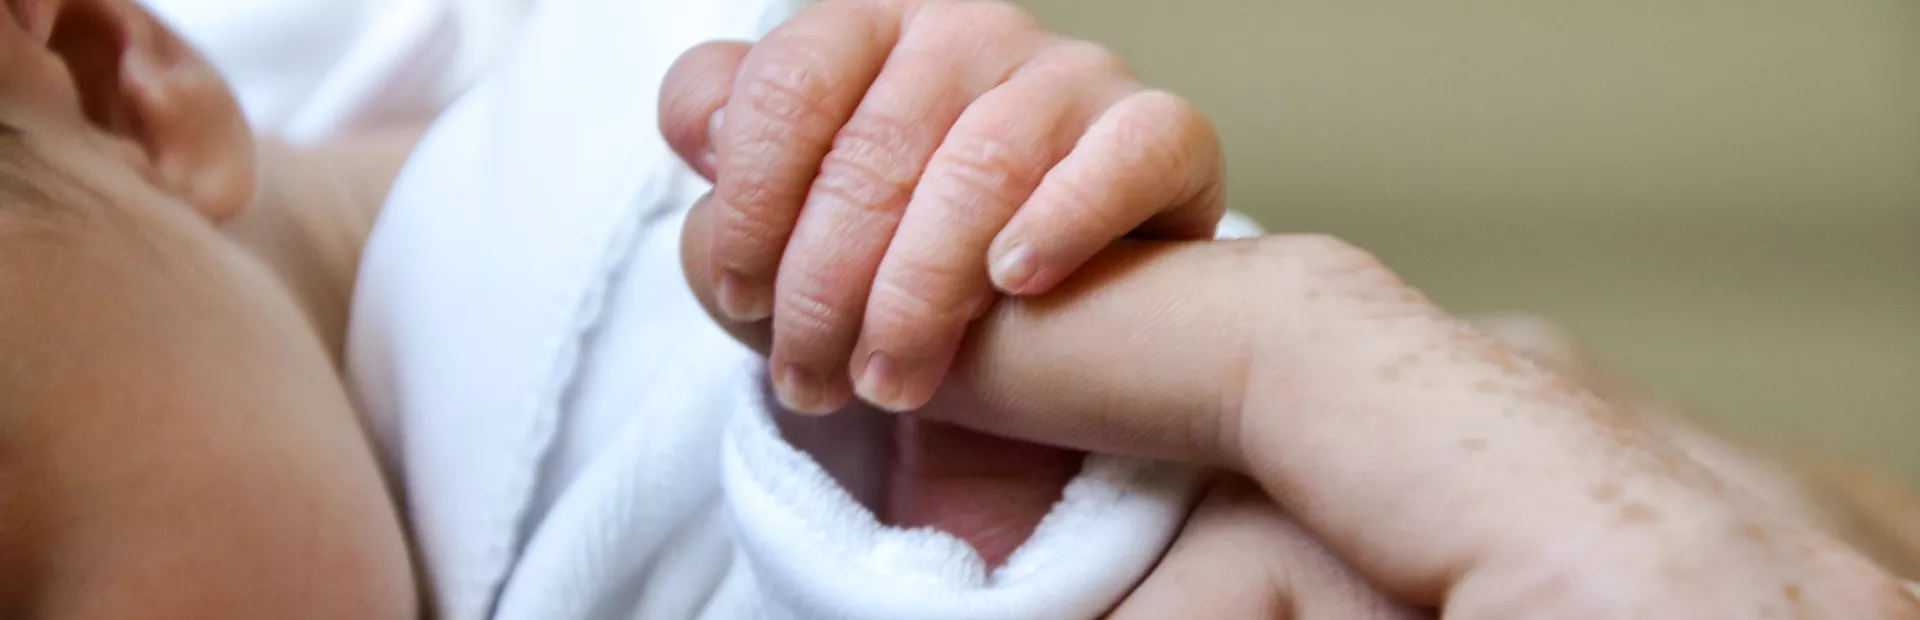 Newborn grasping finger image_0